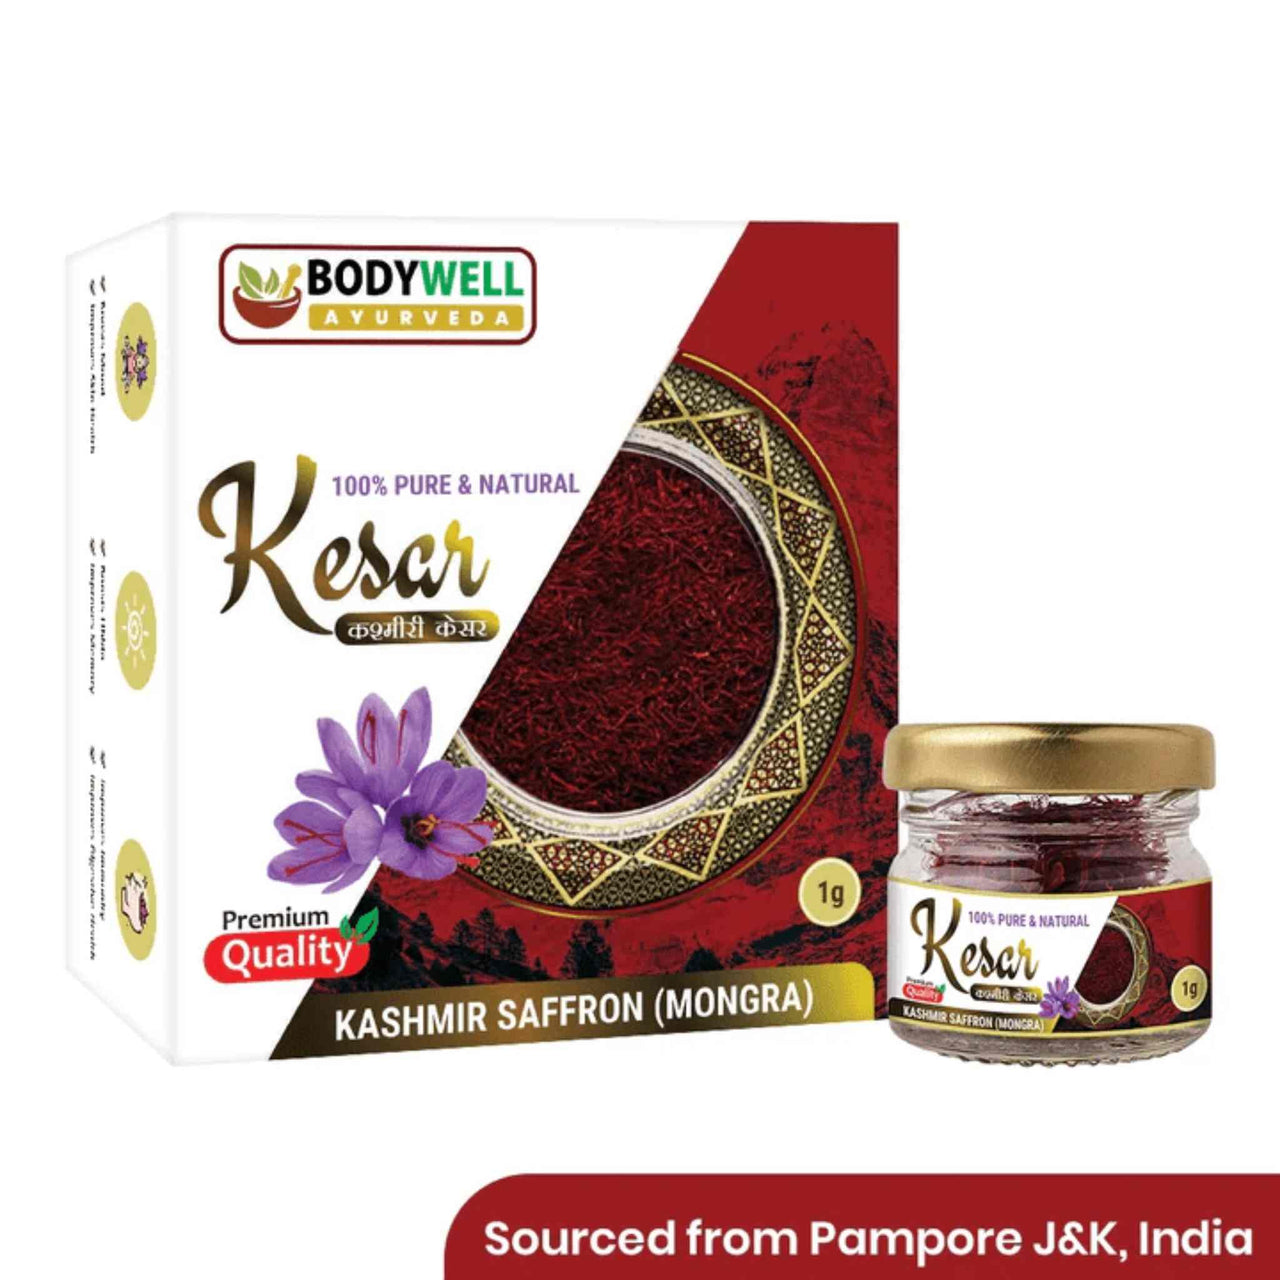 Bodywell Ayurveda - Natural, Pure, Hand-picked Original Kashmiri Saffron- CBD Store India